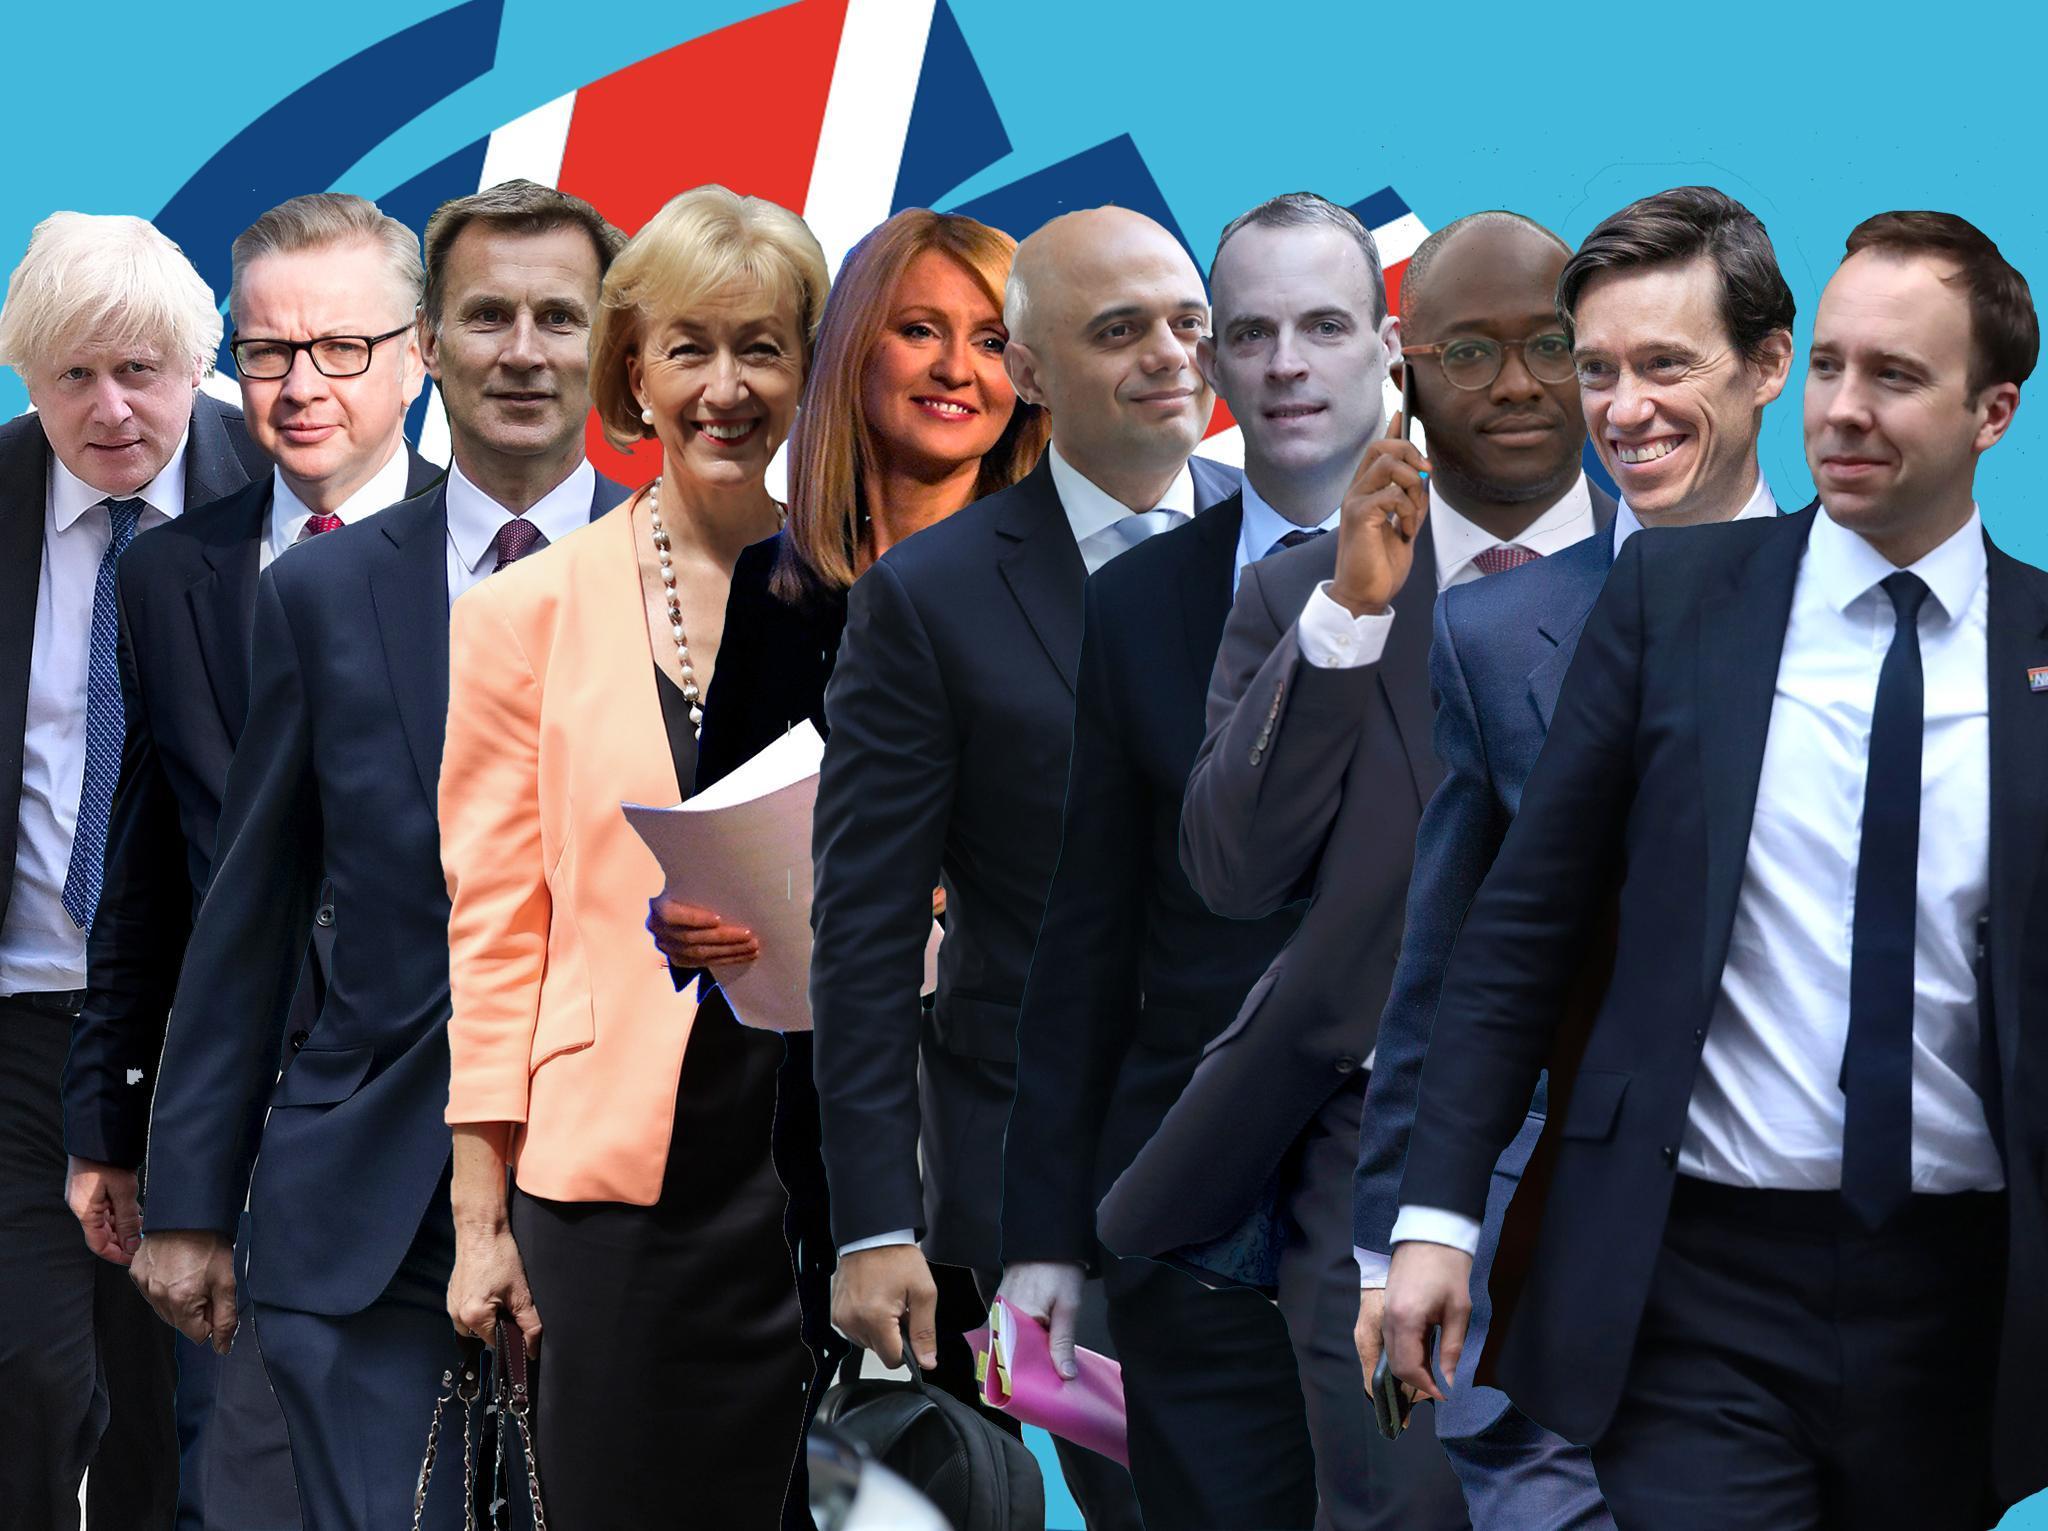 The Tory leadership contenders